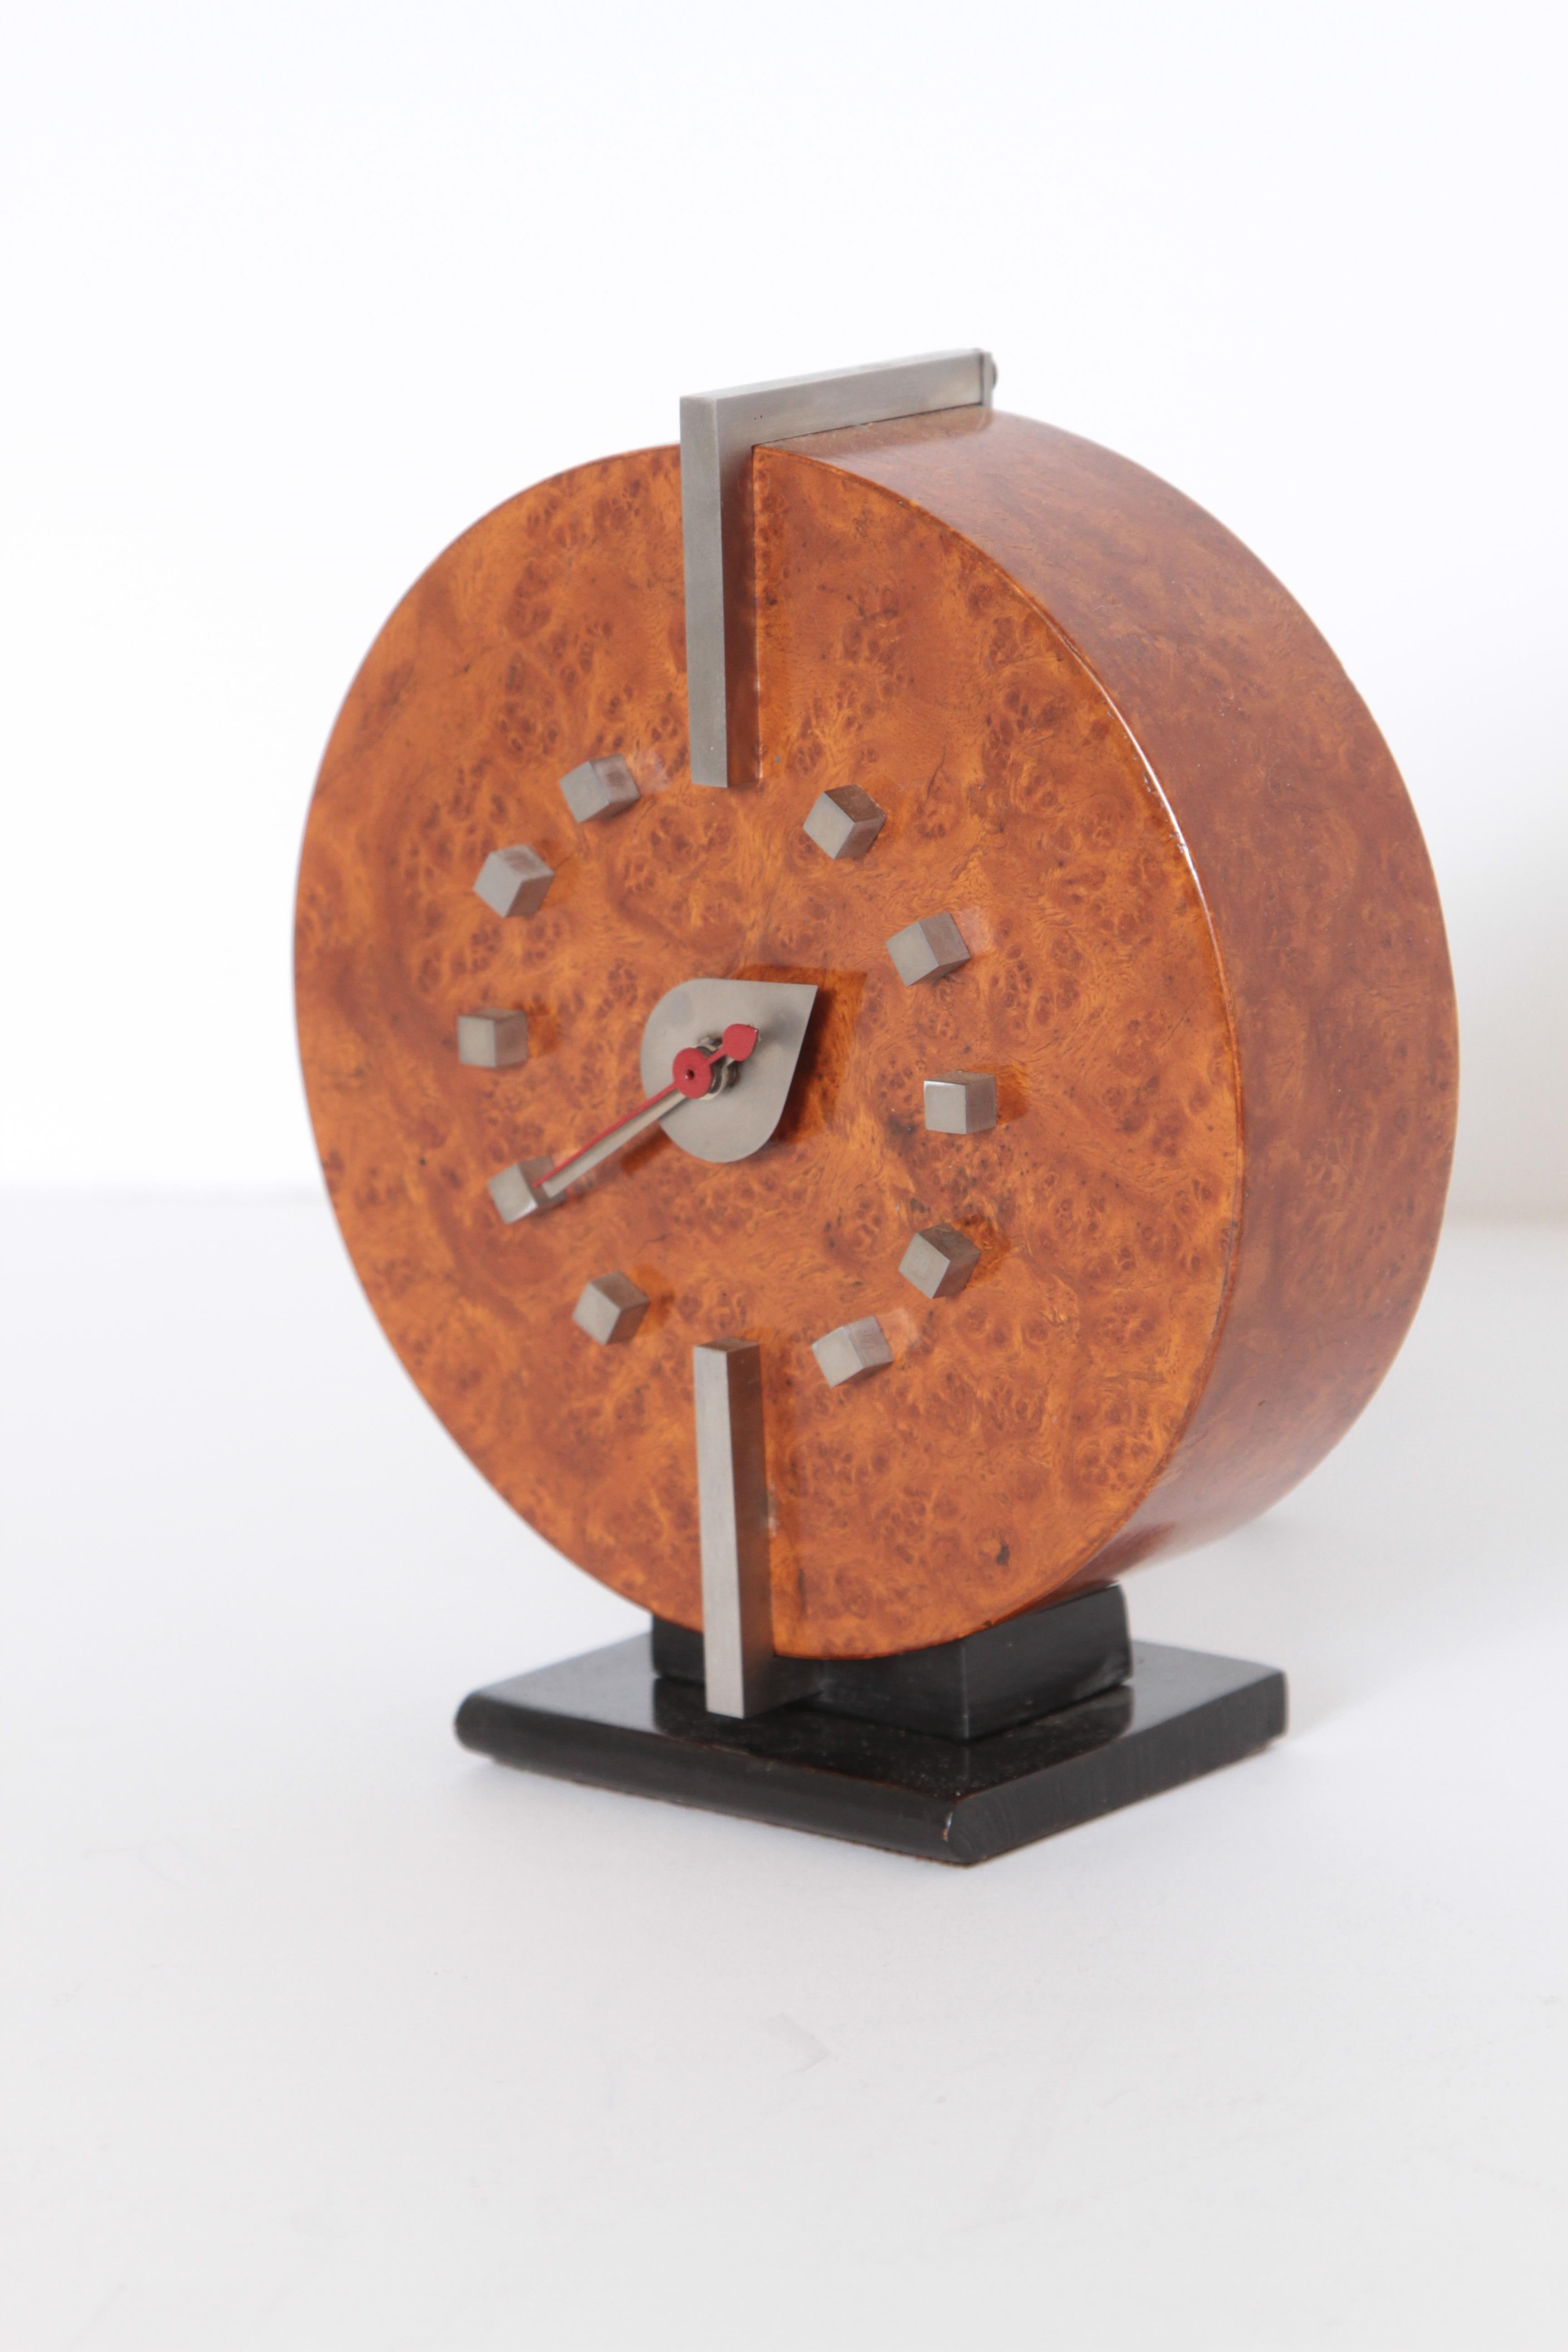 Machine Age Art Deco Gilbert Rohde Herman Miller 1933 Century of Progress Clock For Sale 6